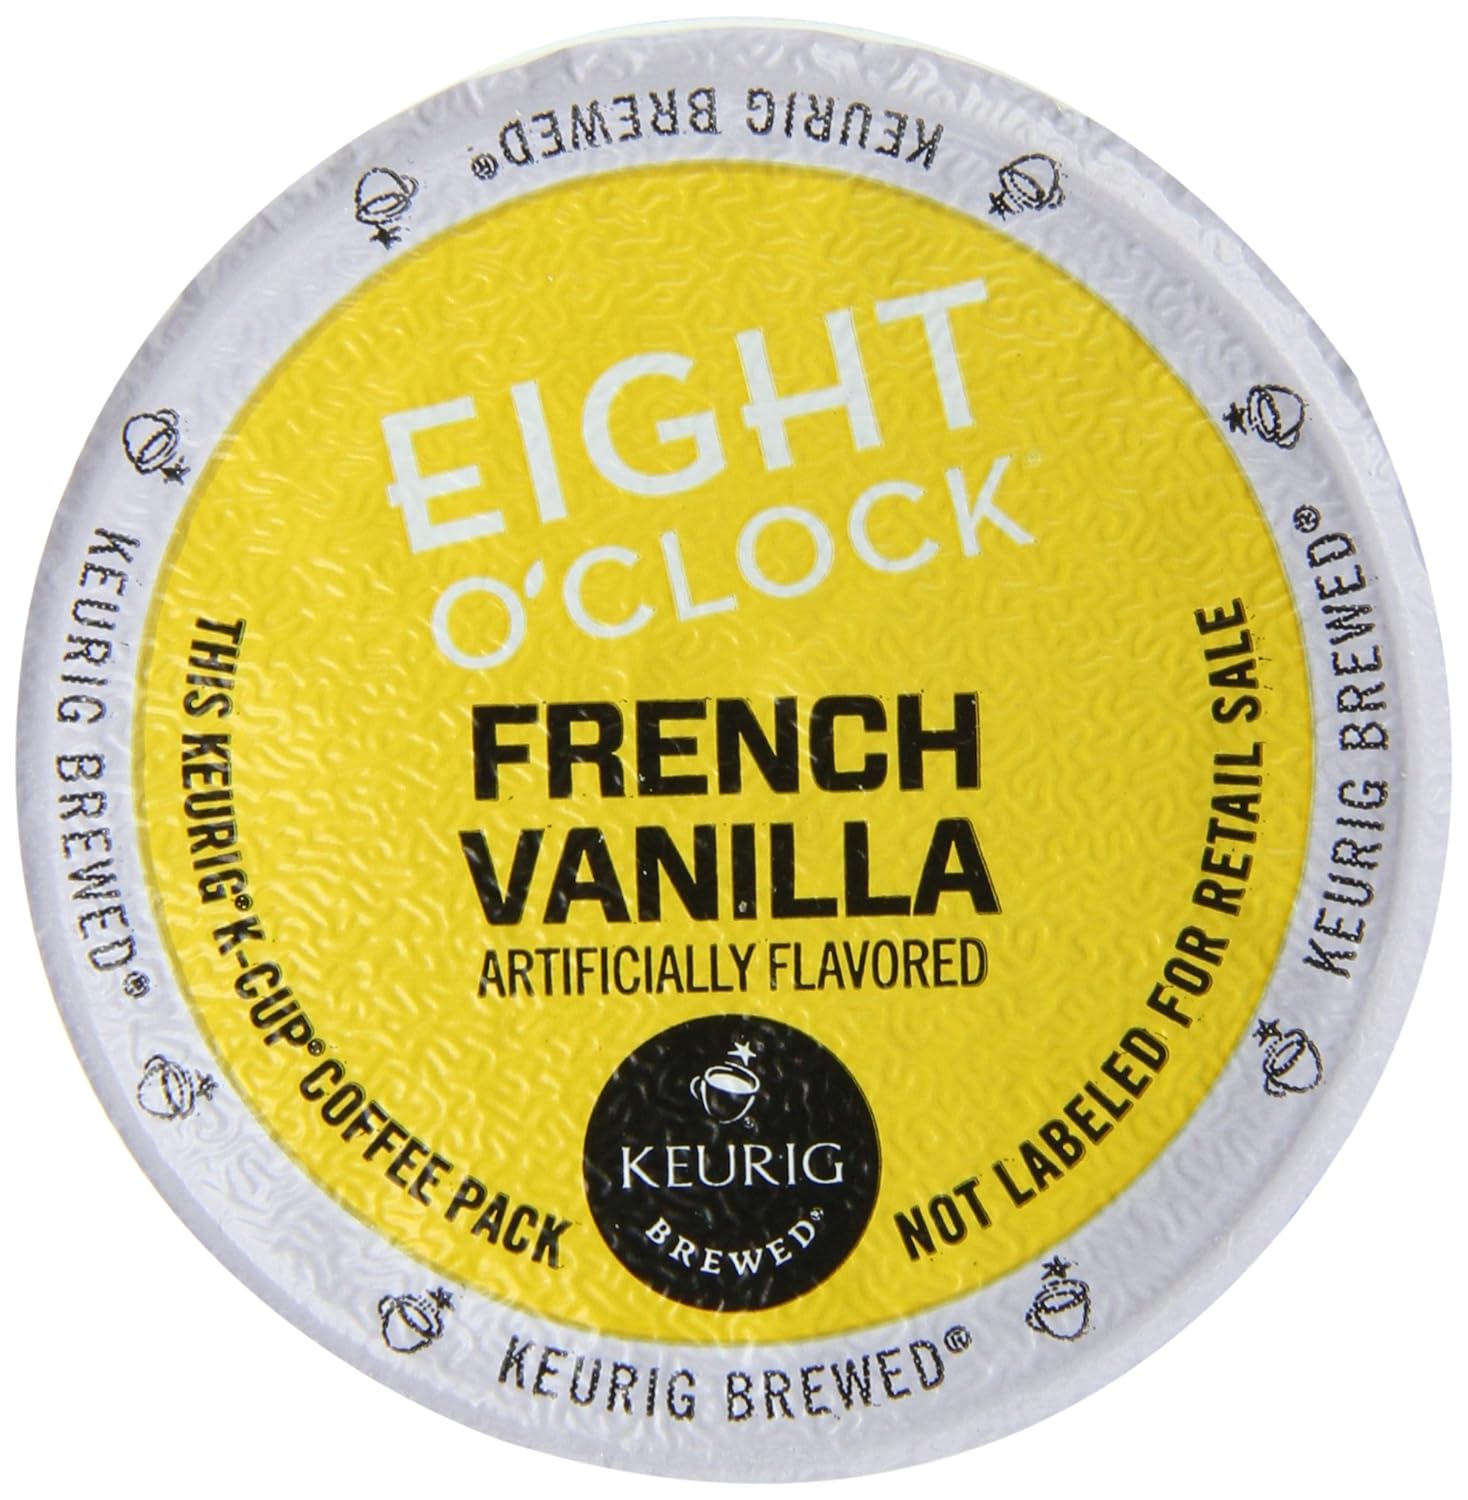 Eight O'Clock Ground Coffee, French Vanilla, 4.1 Ounce